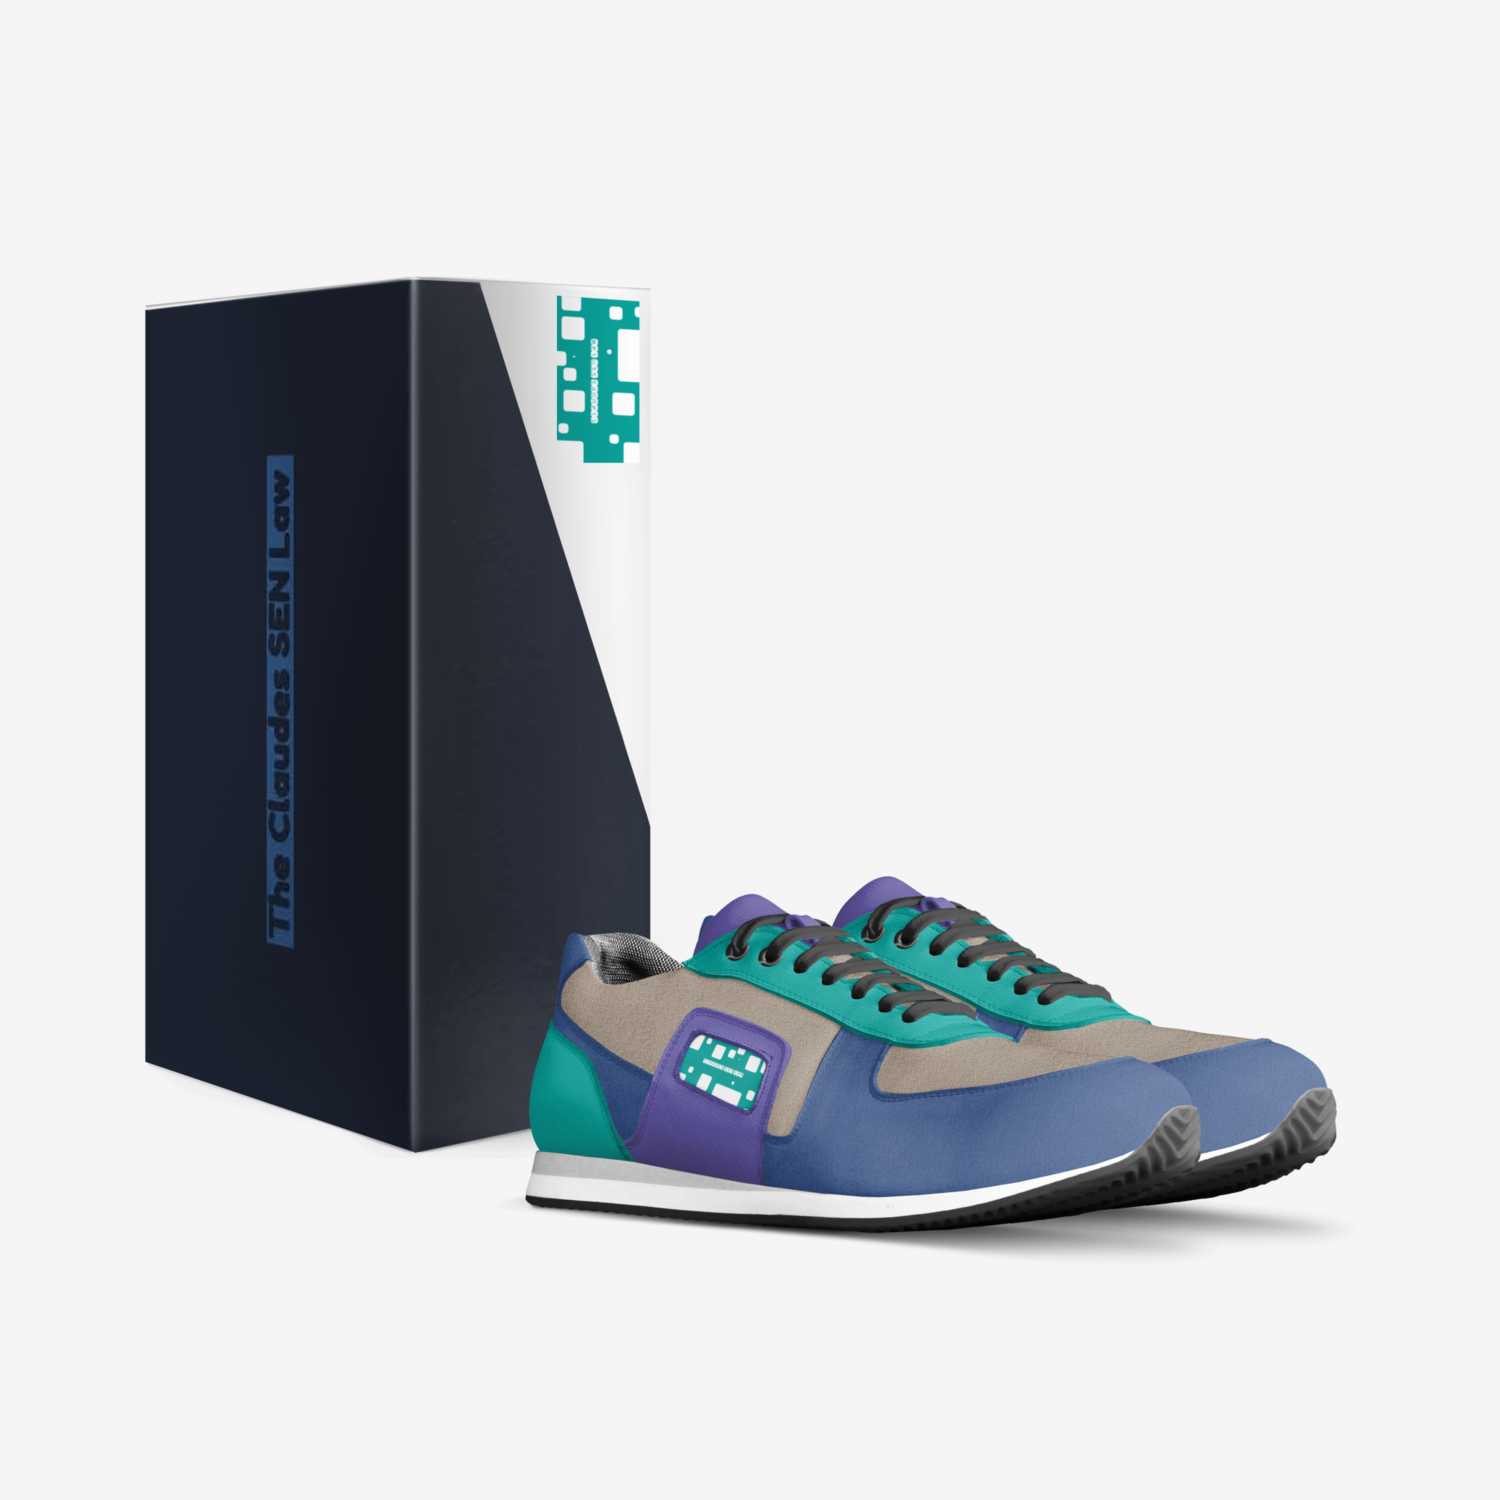 Claudes SEN Law custom made in Italy shoes by Aquayemi-claude Garnett Akinsanya | Box view